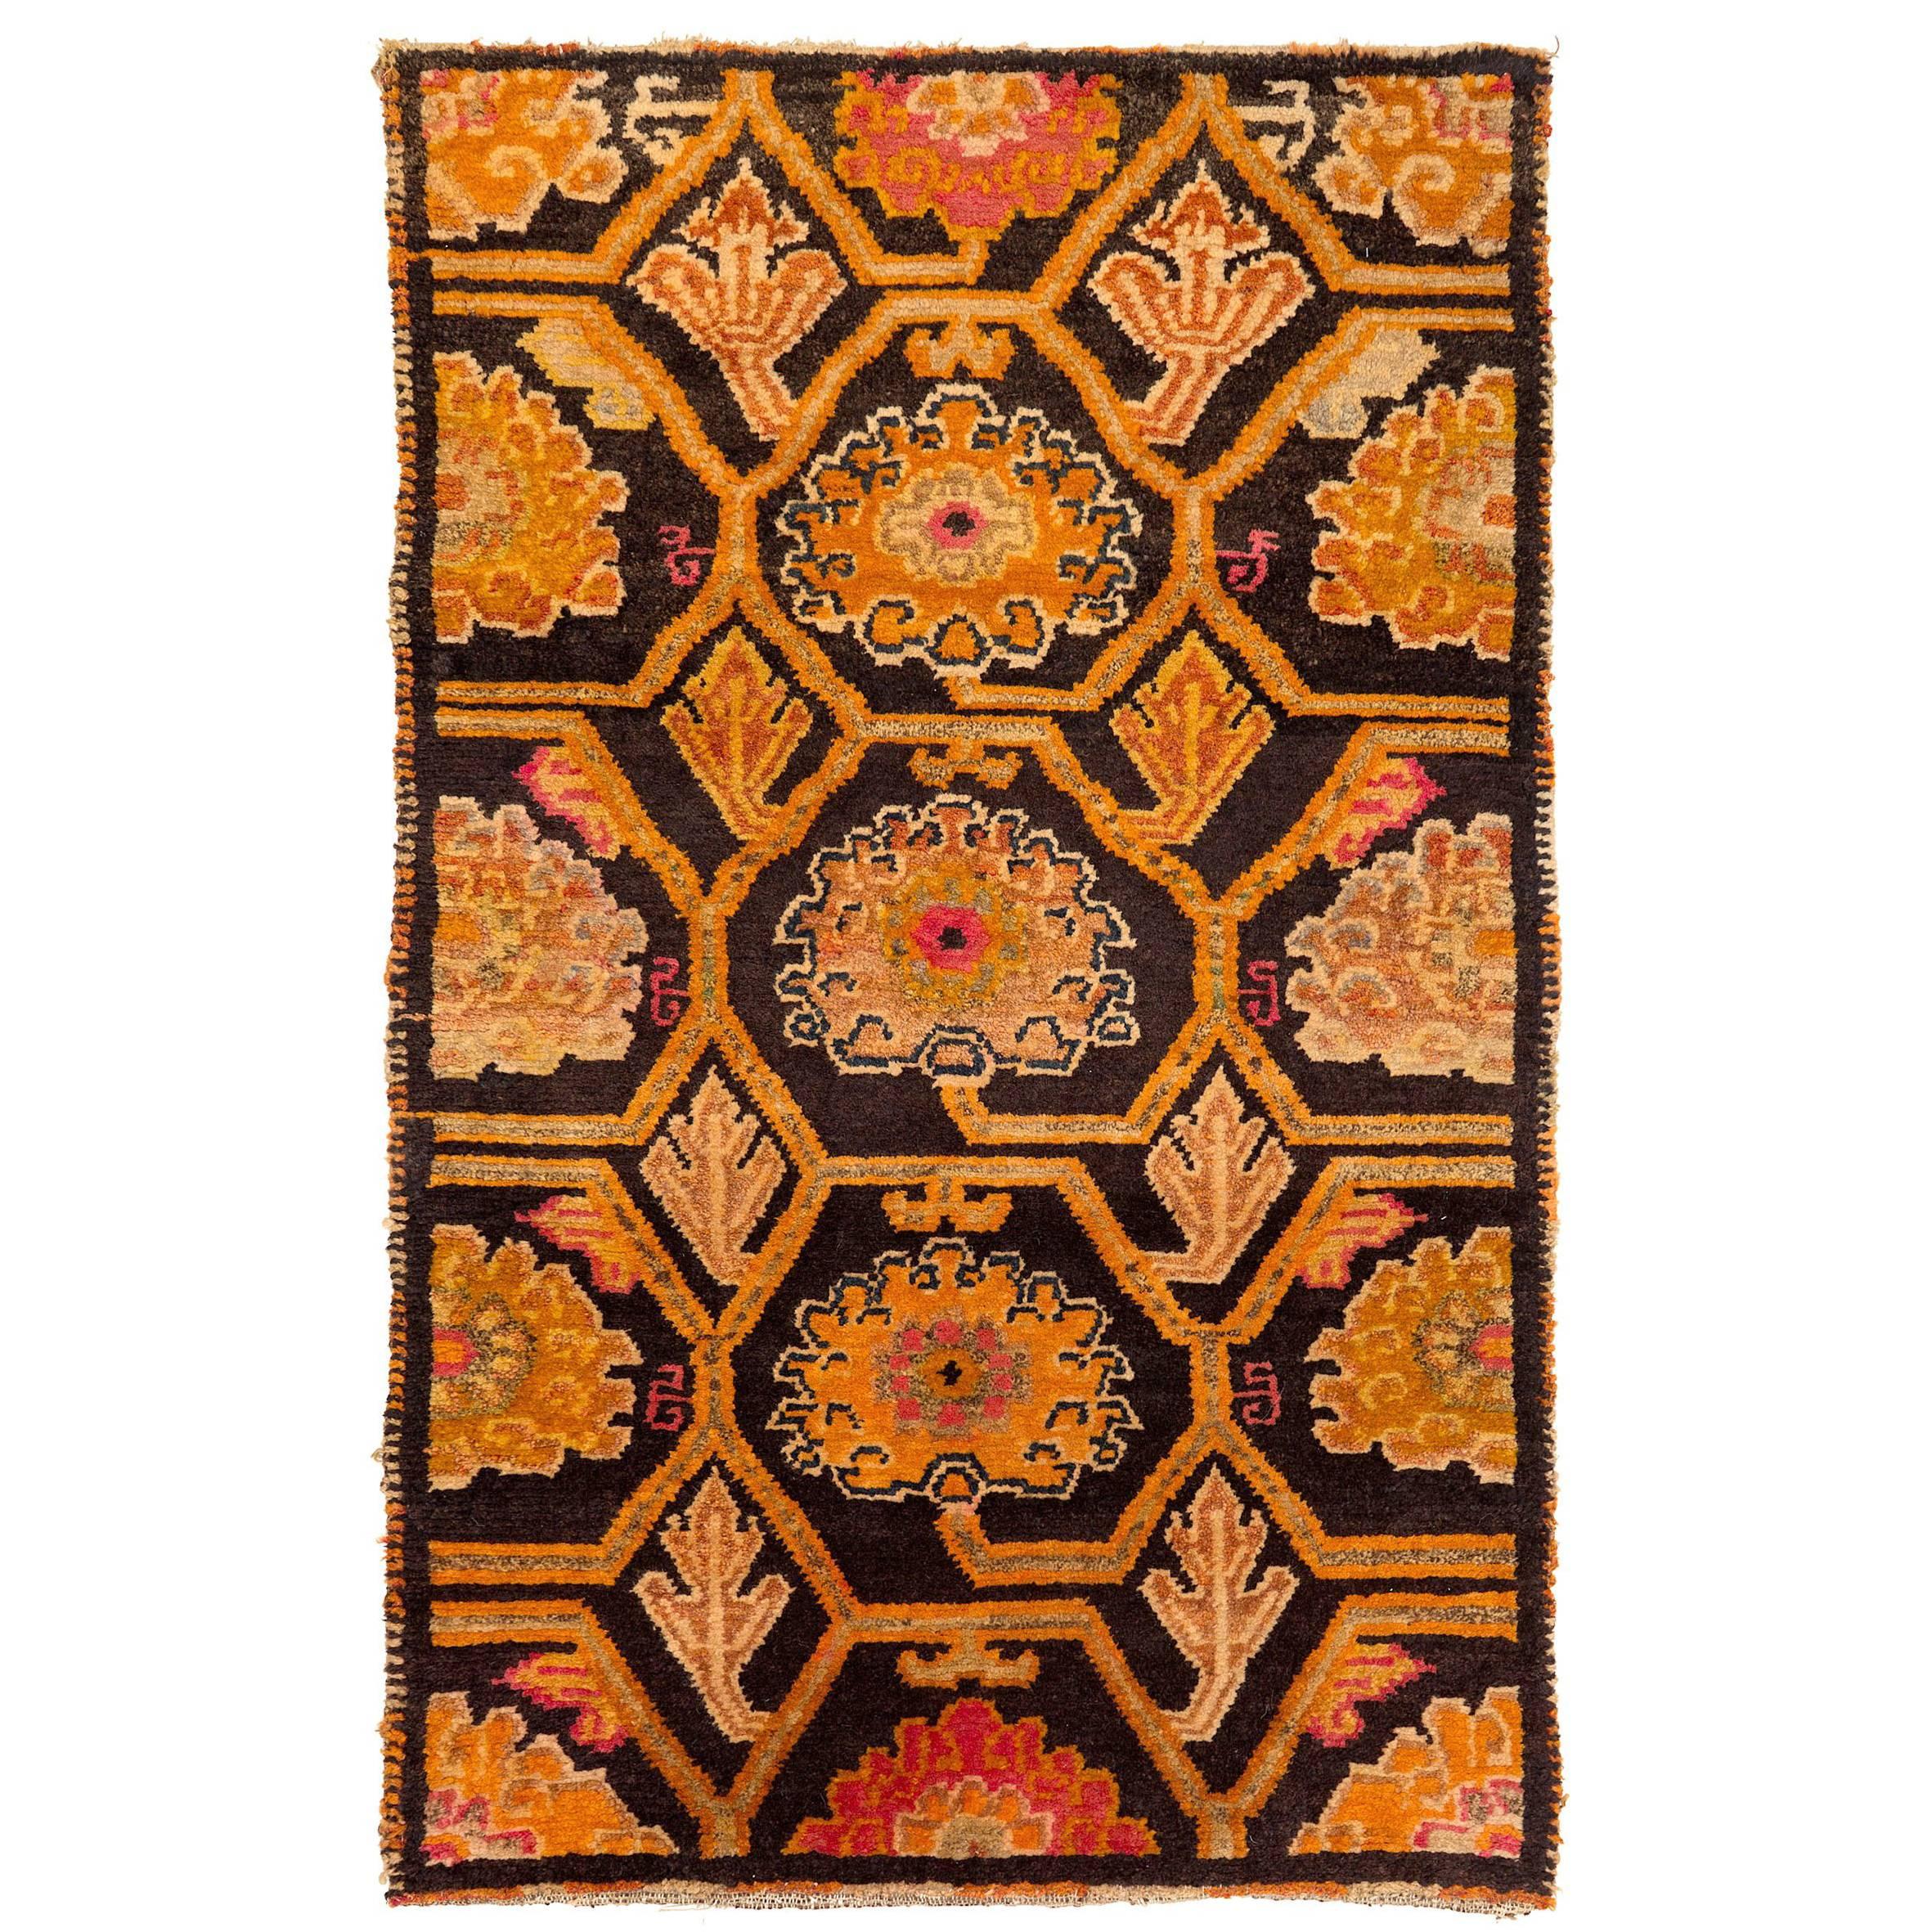 Antique Tibetan Art Deco Rug